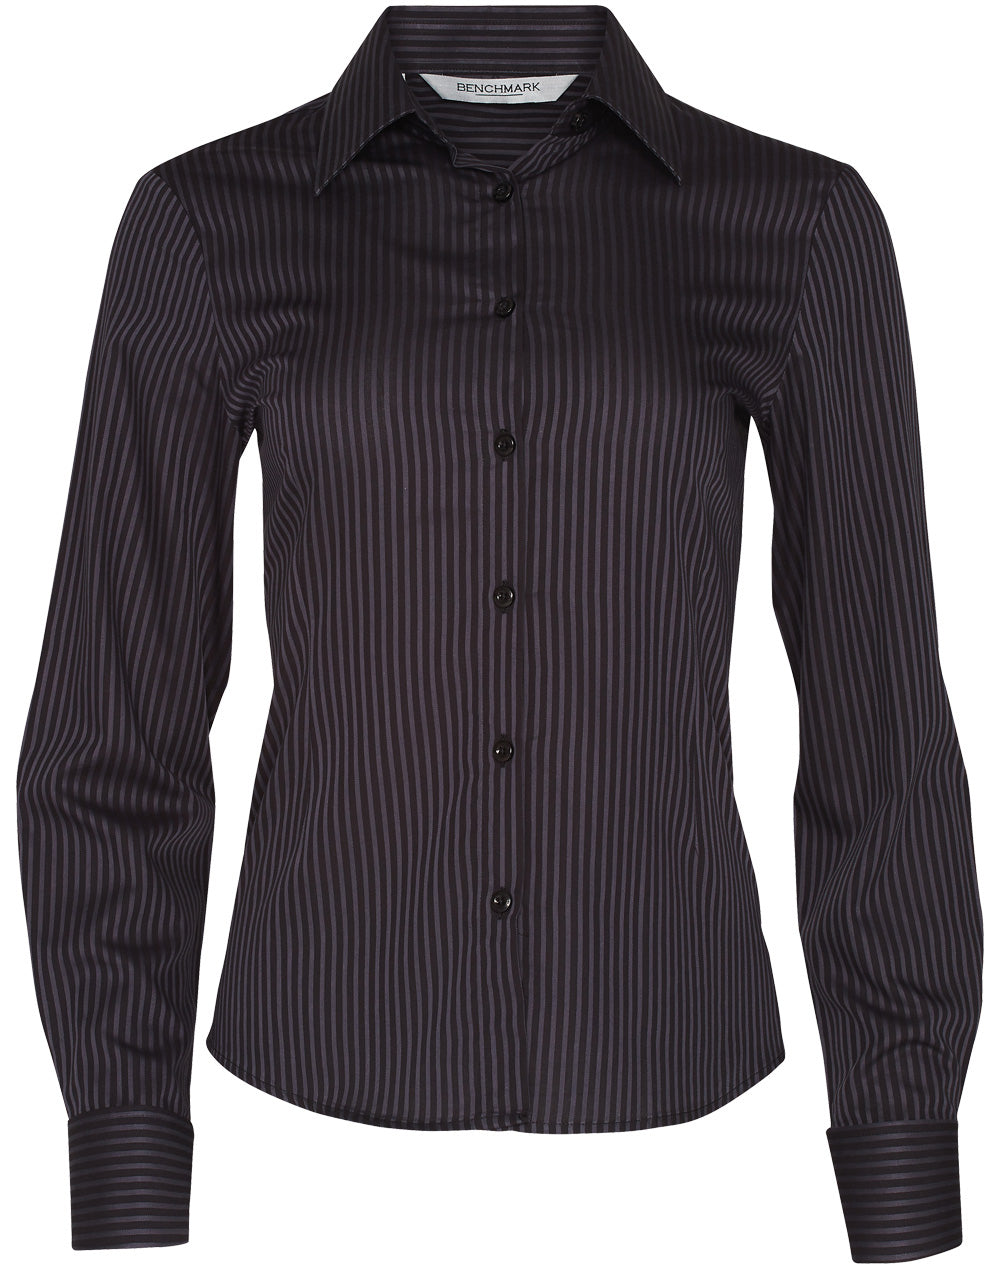 Benchmark M8132 Women's Dobby Stripe long sleeve shirt